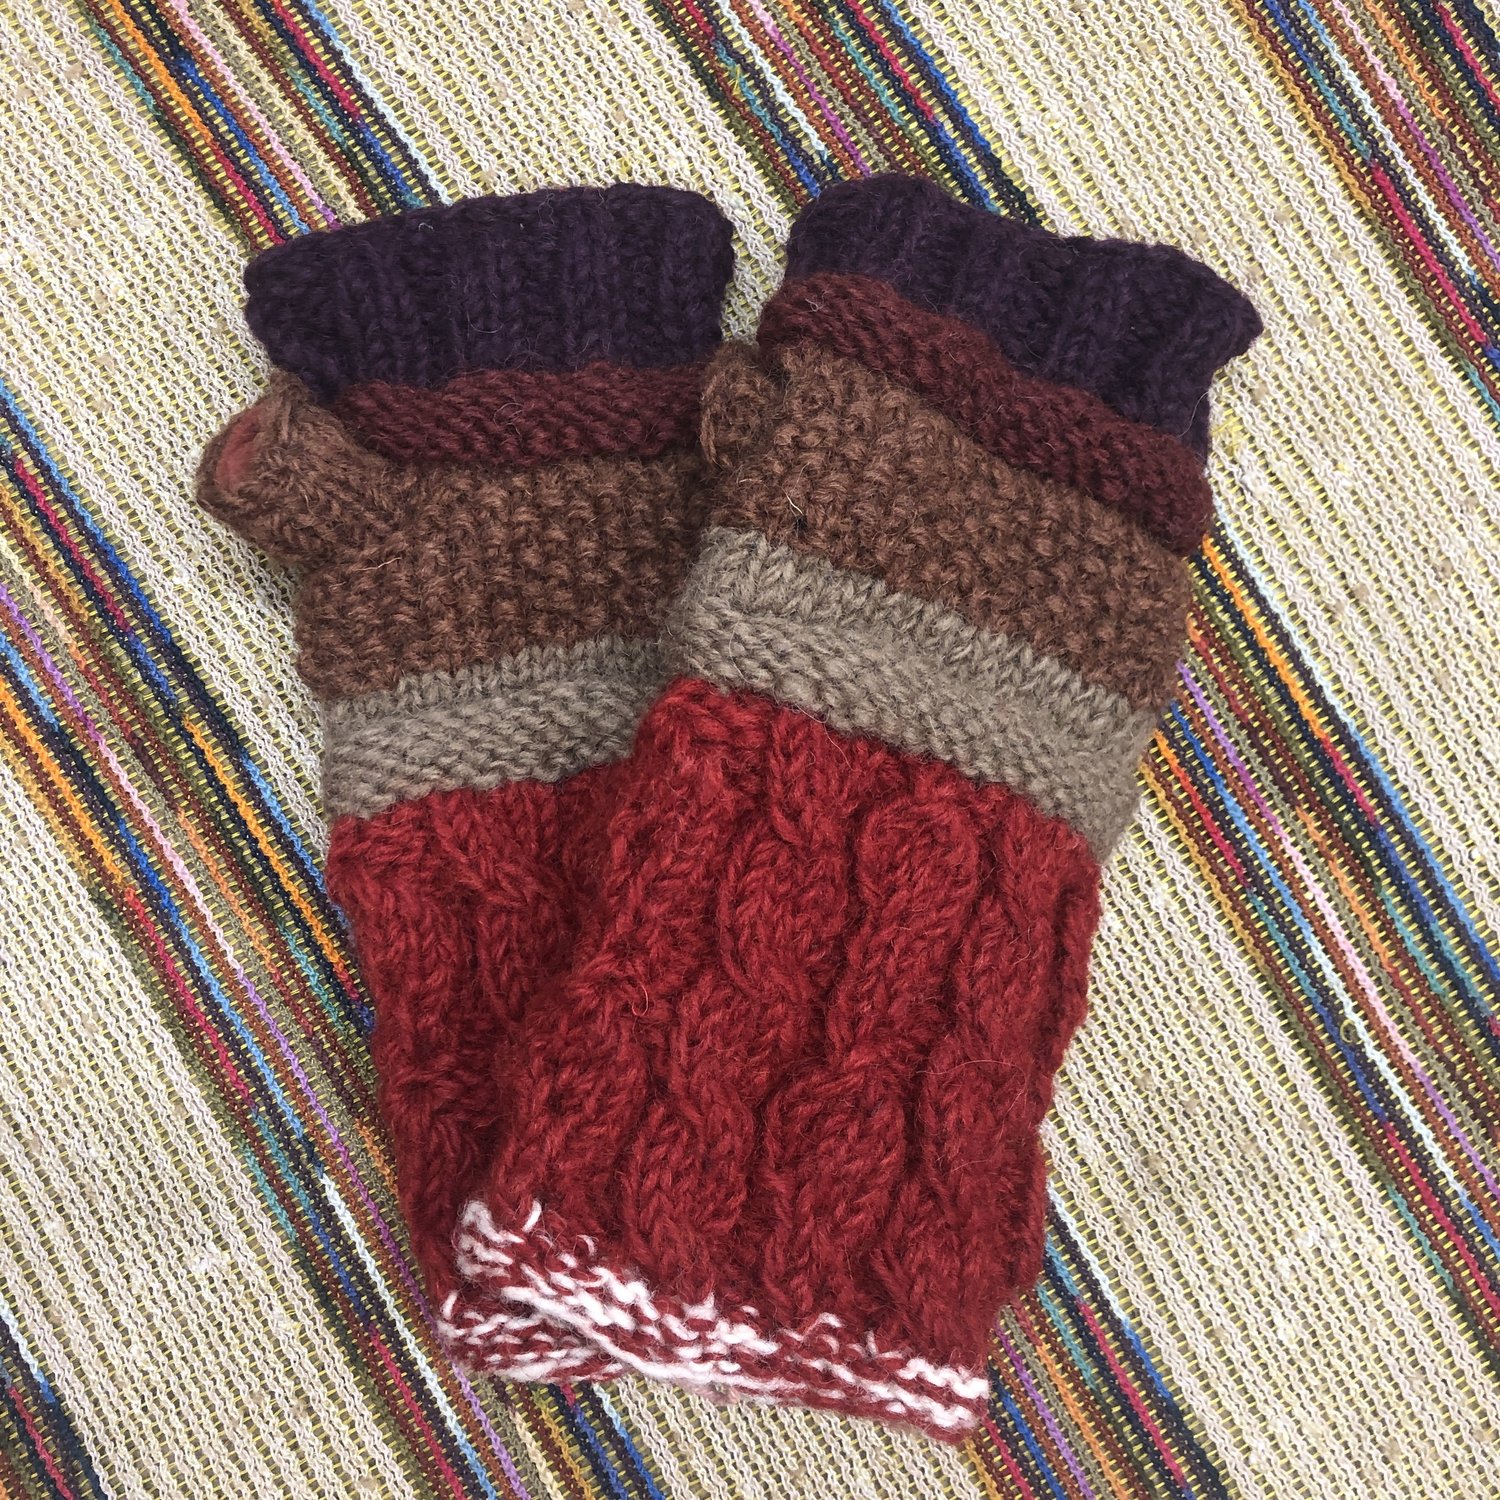 Red Chunky Knit Yarn